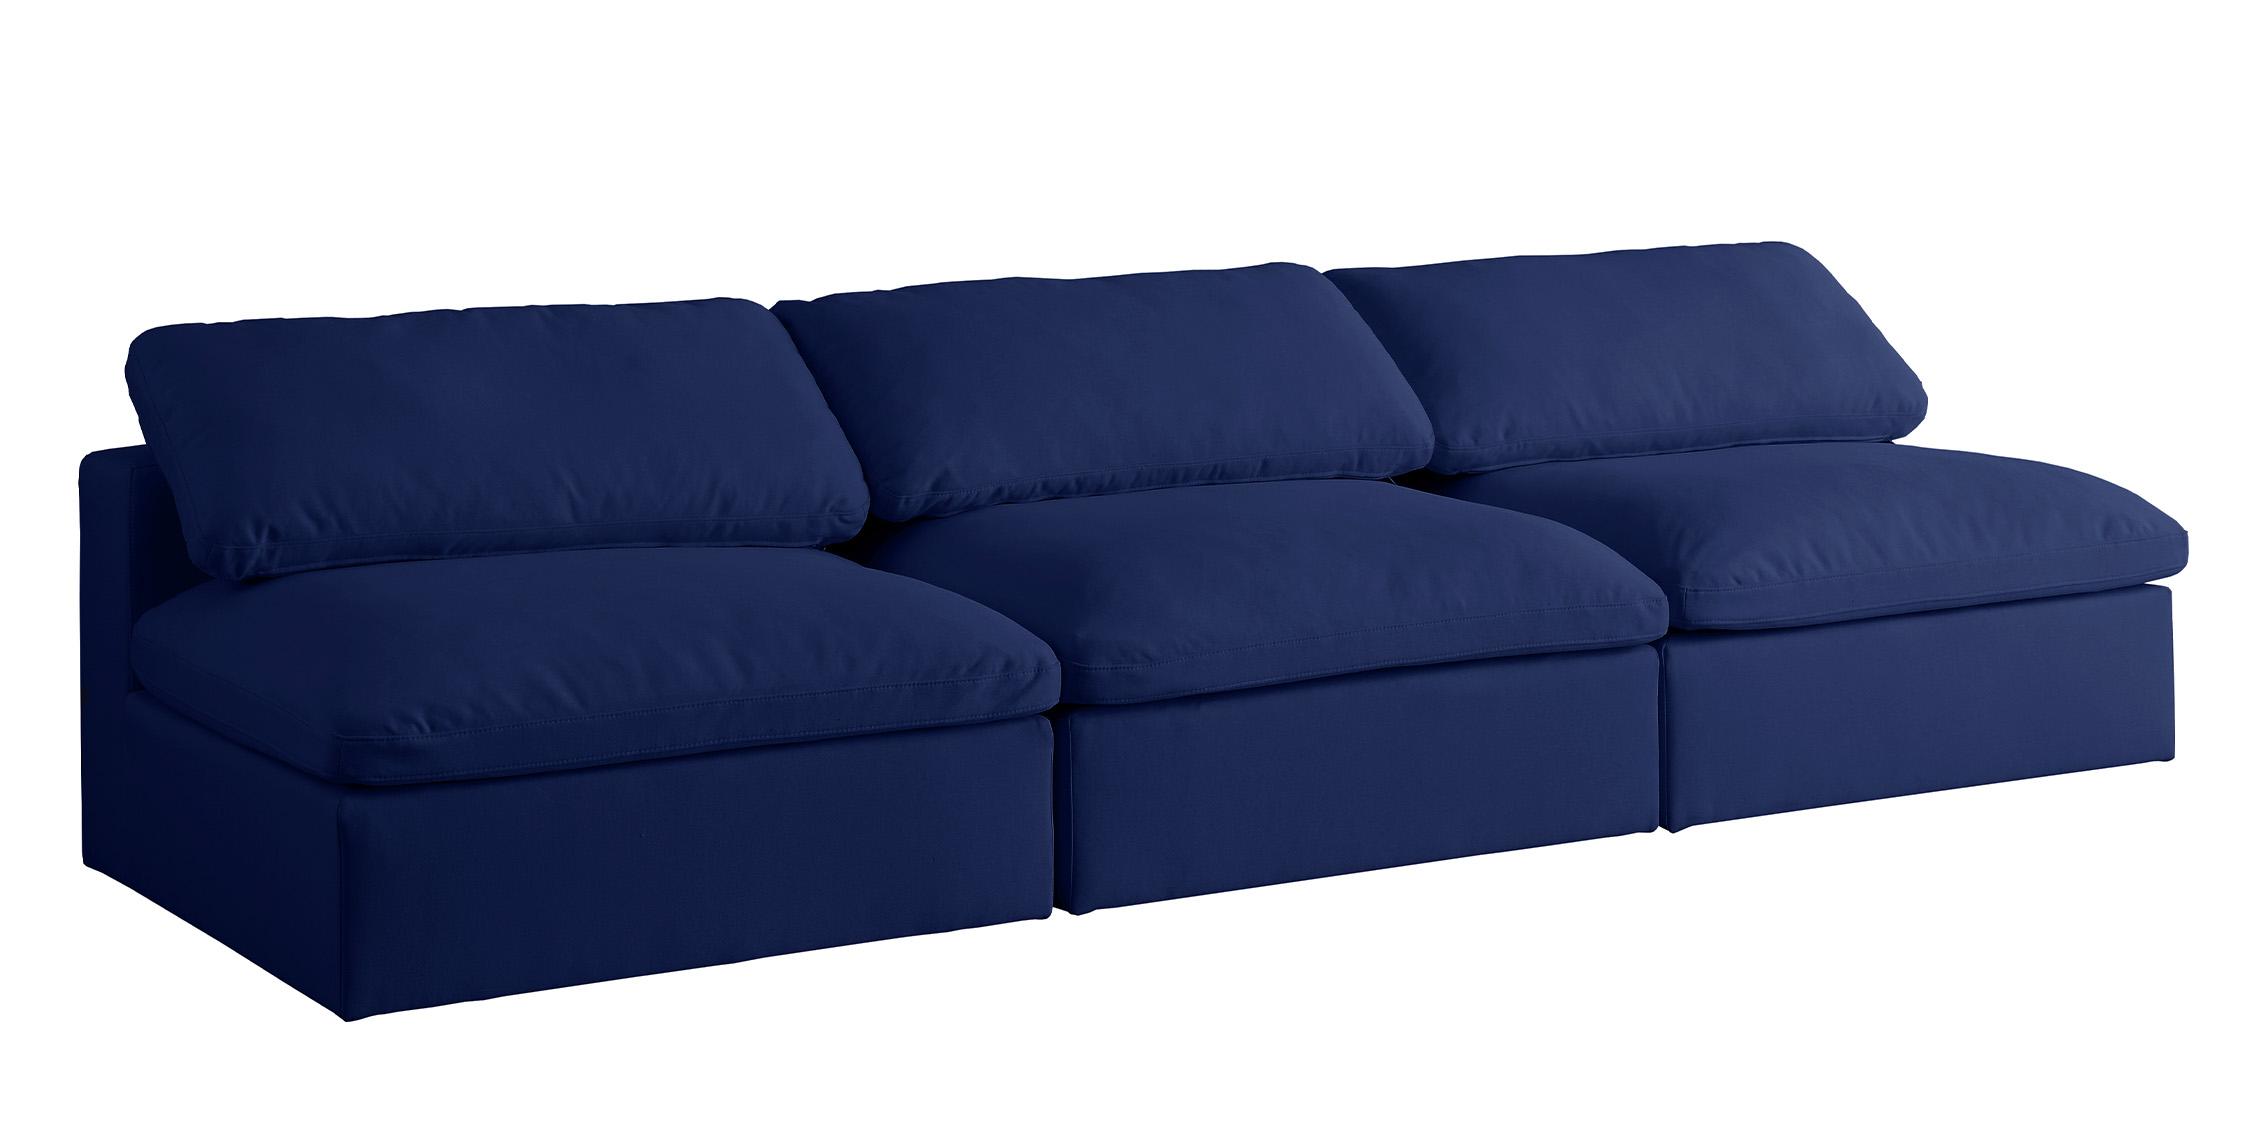 

    
Serene Navy Linen Textured Fabric Deluxe Comfort Modular Armless Sofa S117 Meridian
